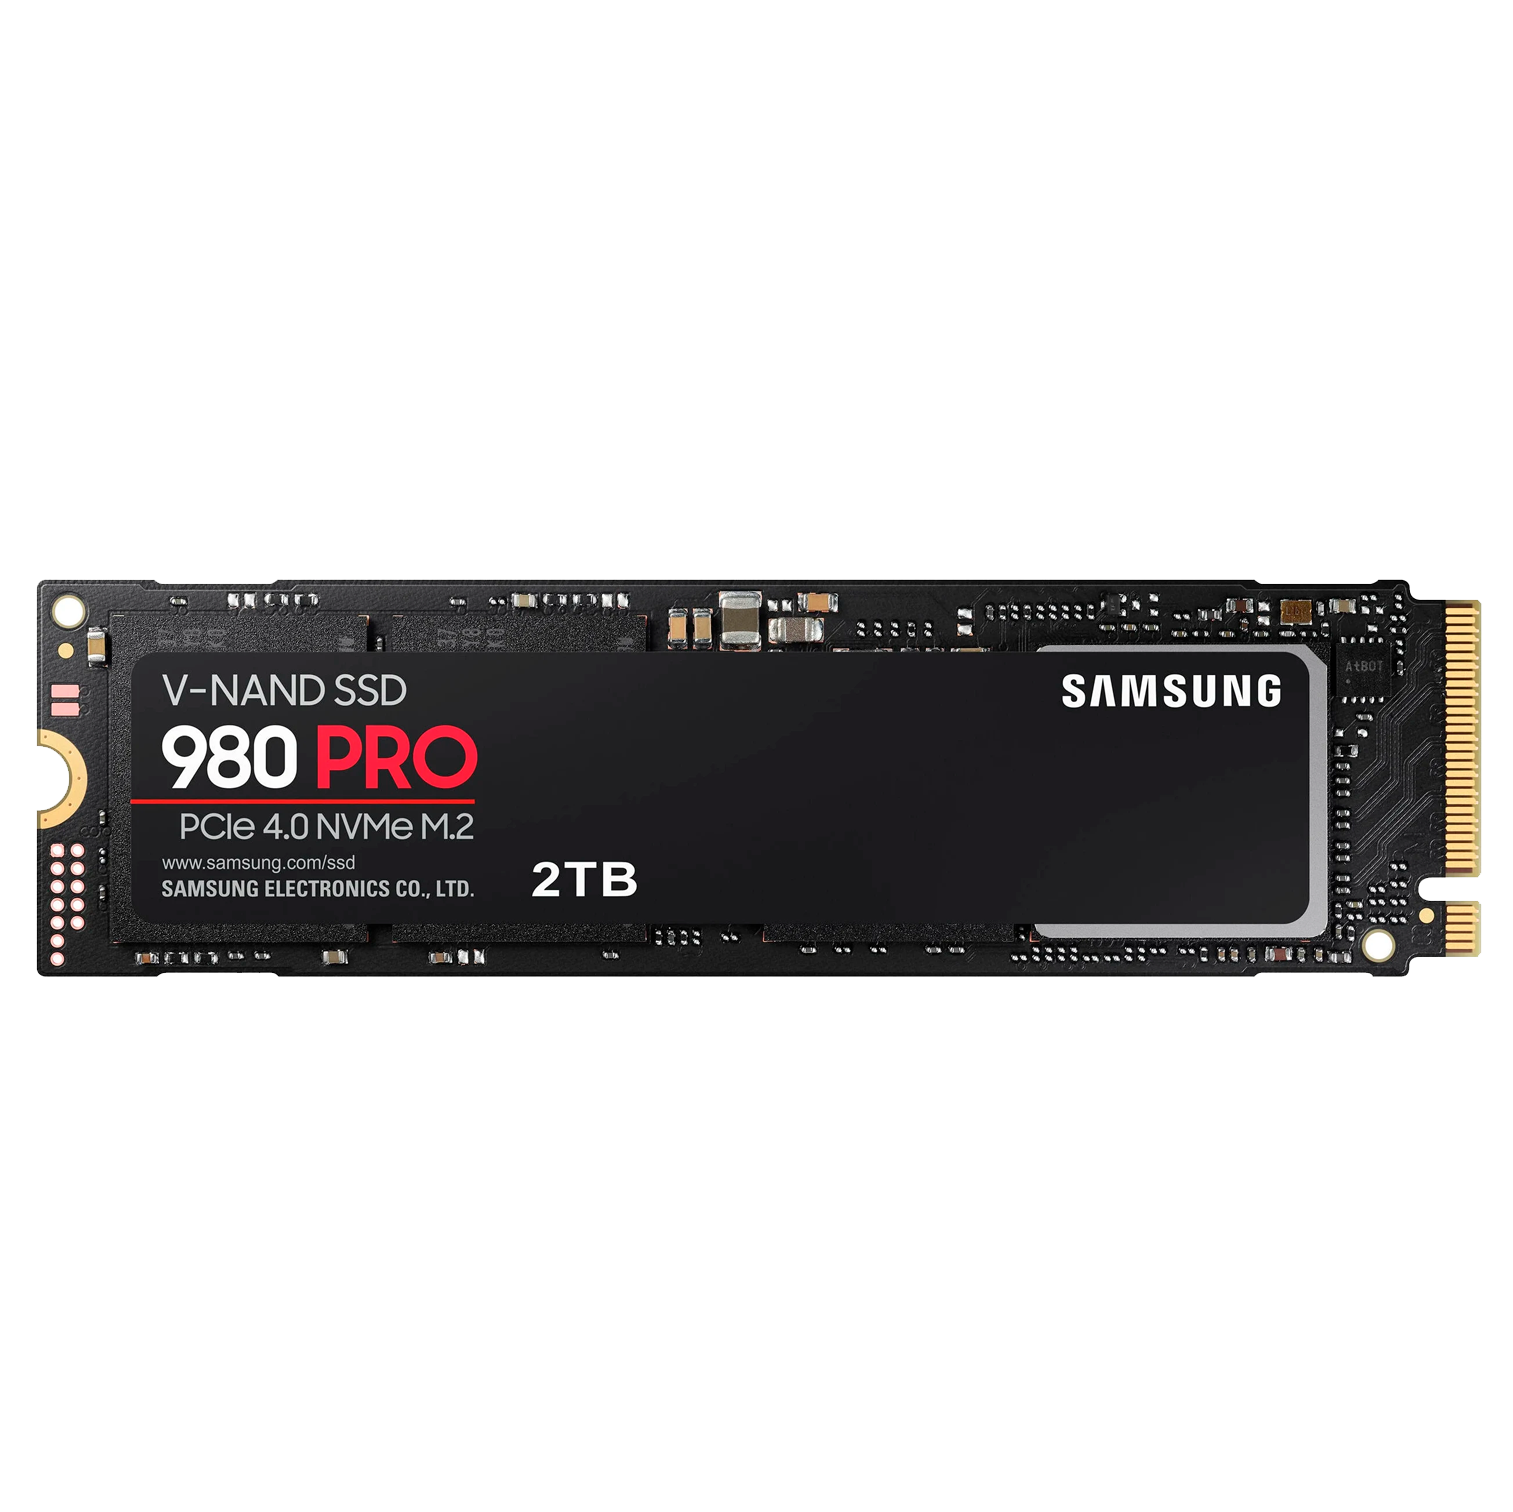 SSD m2 Samsung. Samsung SSD 970 EVO Plus 500gb. SSD Samsung 980 Pro 2tb. Samsung m.2 970 EVO Plus 500 GB. Mz v8v250bw